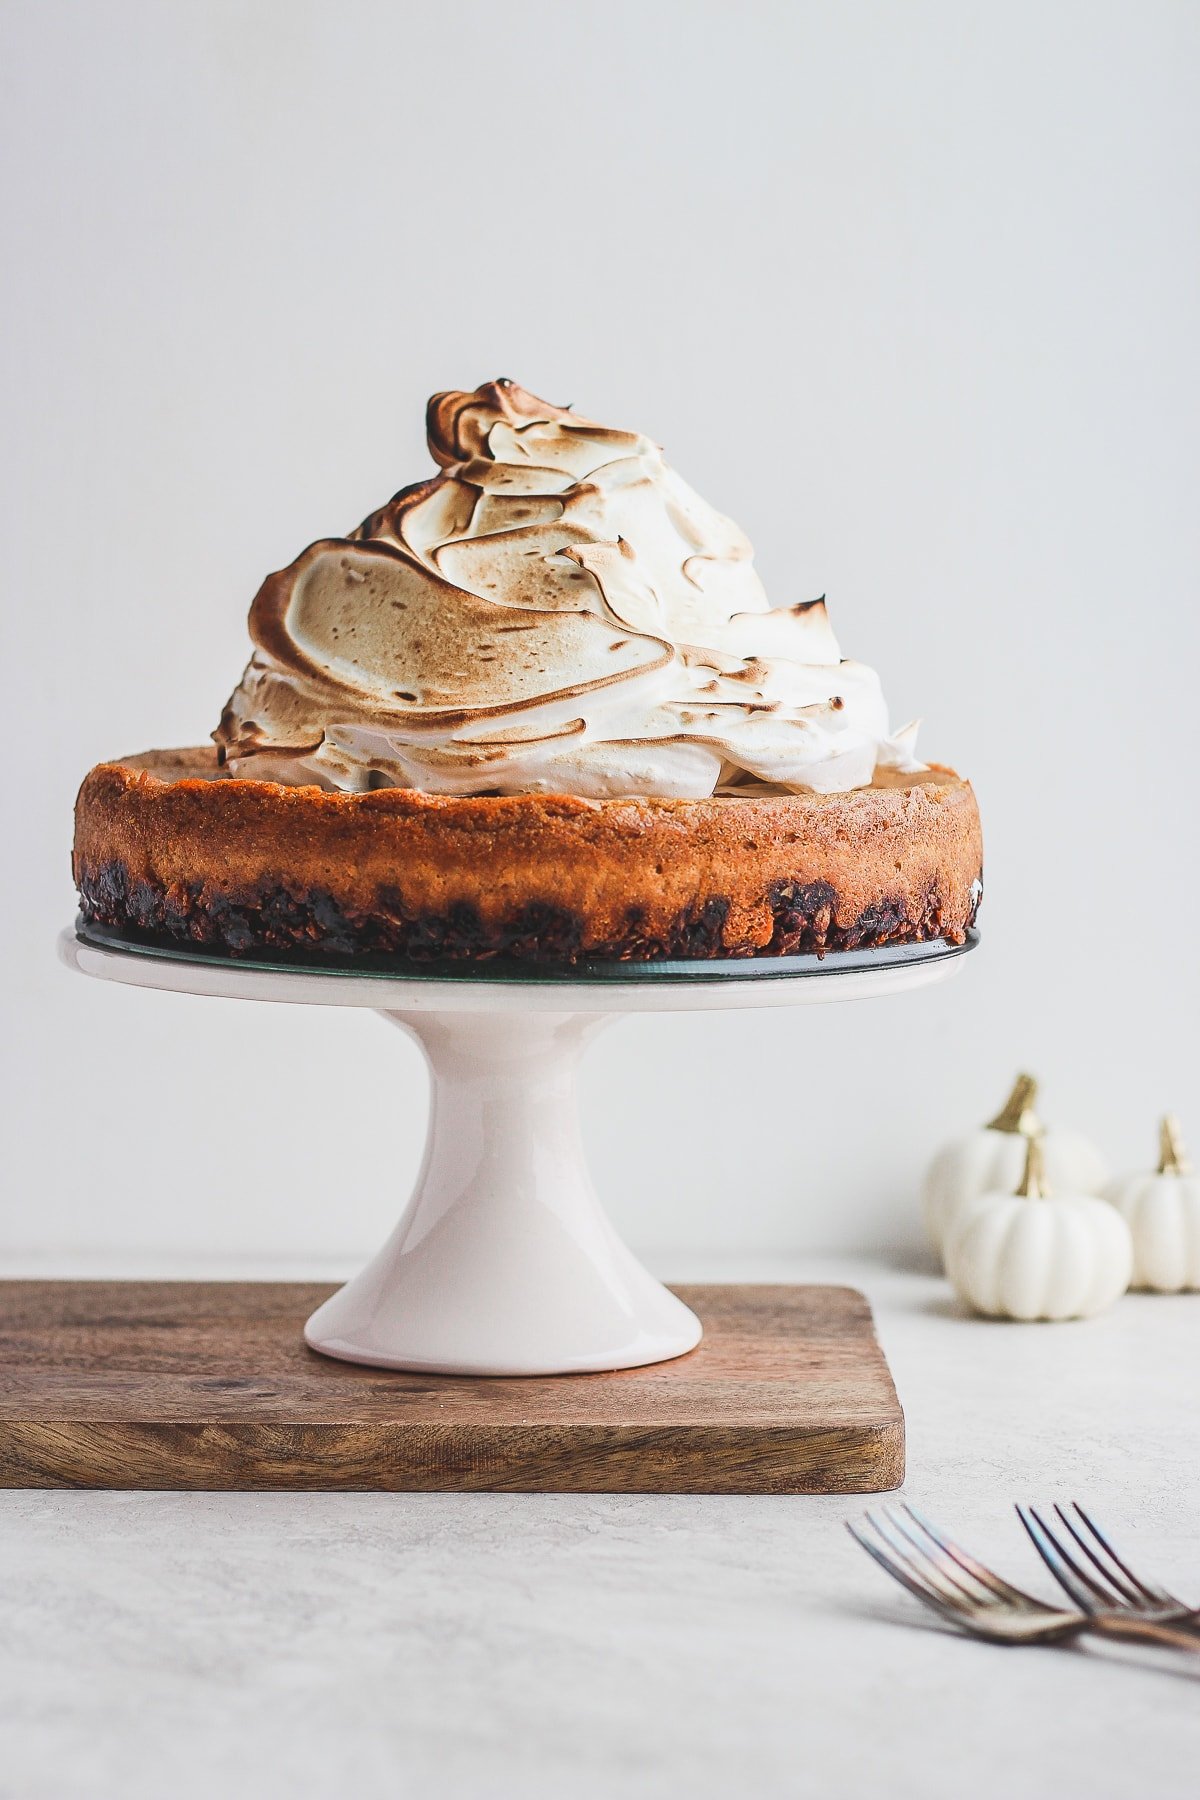 A vegan pumpkin cheesecake on a cake stand.